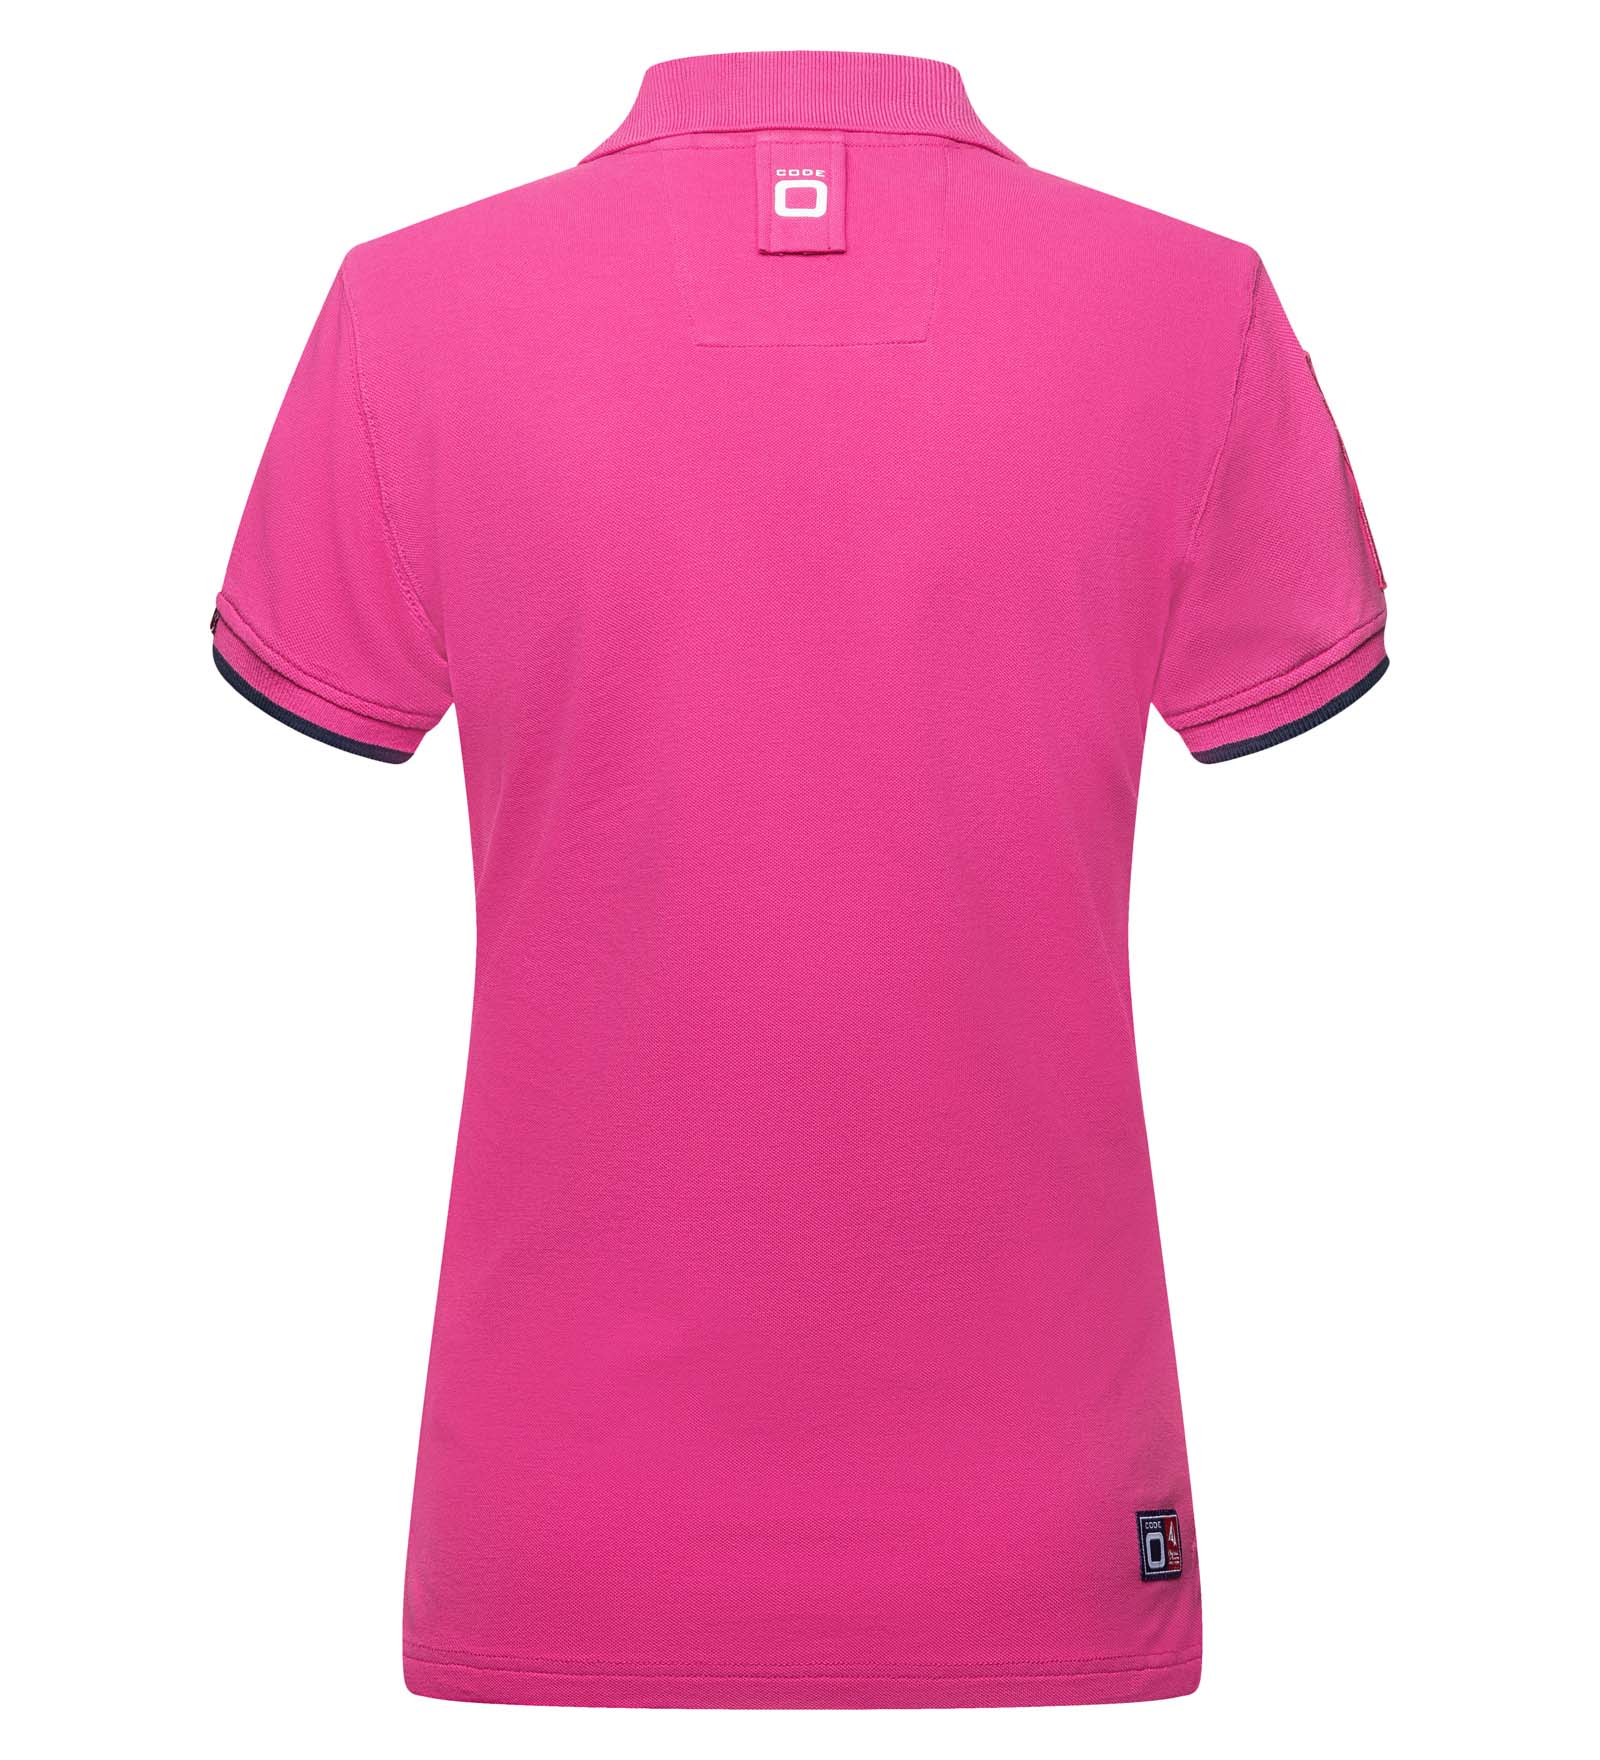 St. Barth Polo Shirt Women pink